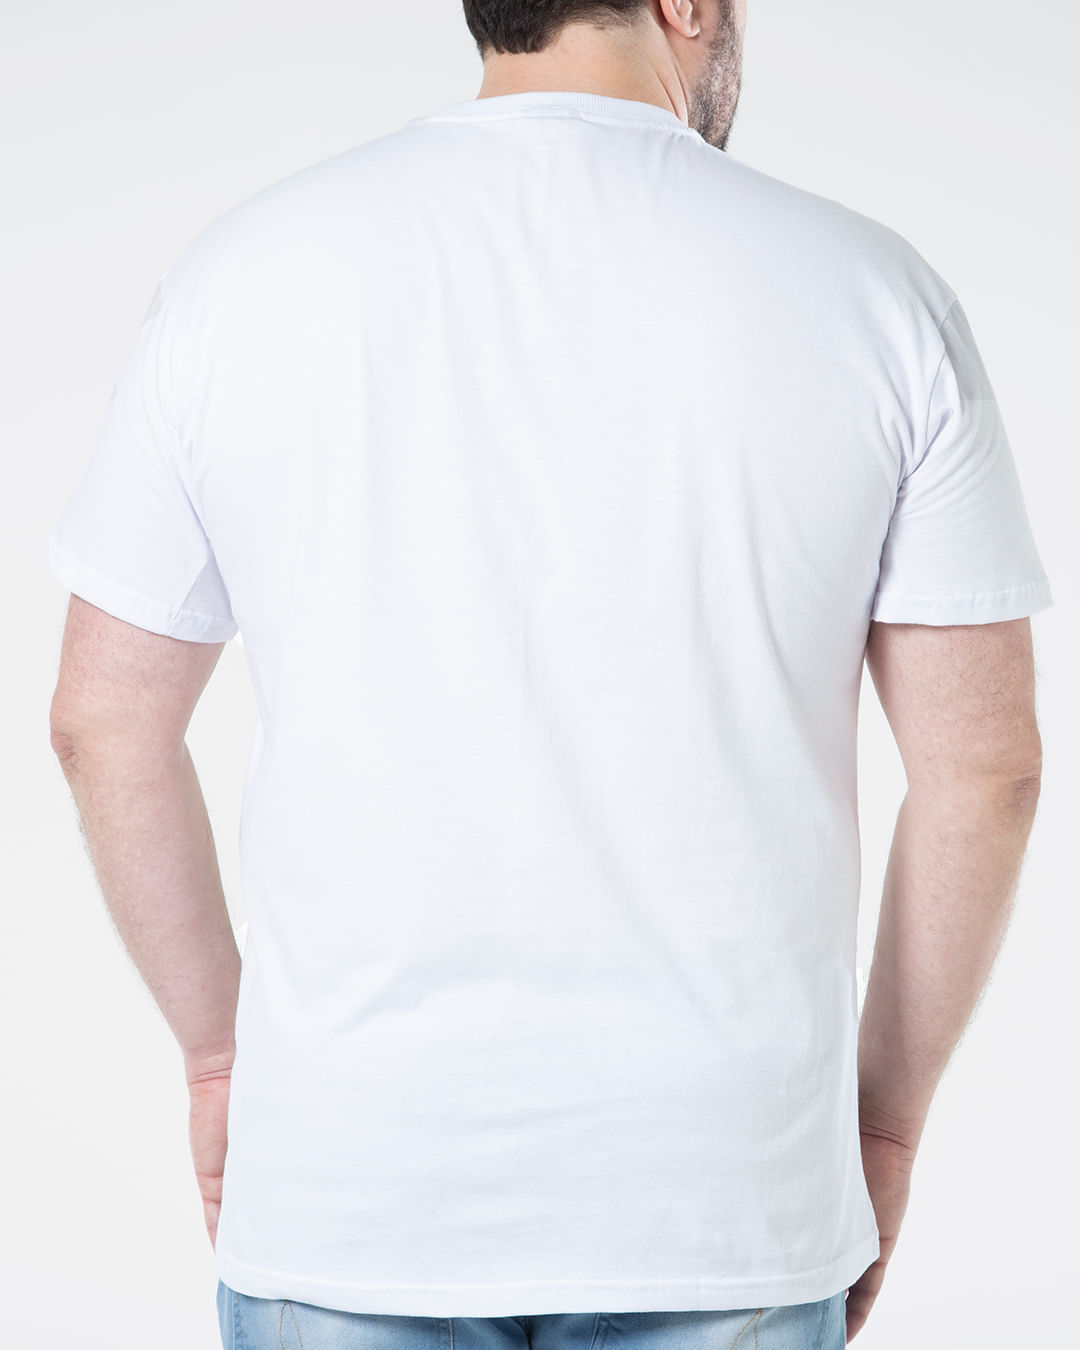 Camiseta-Masculina-Plus-Size-Manga-Curta-Ecko-Branca